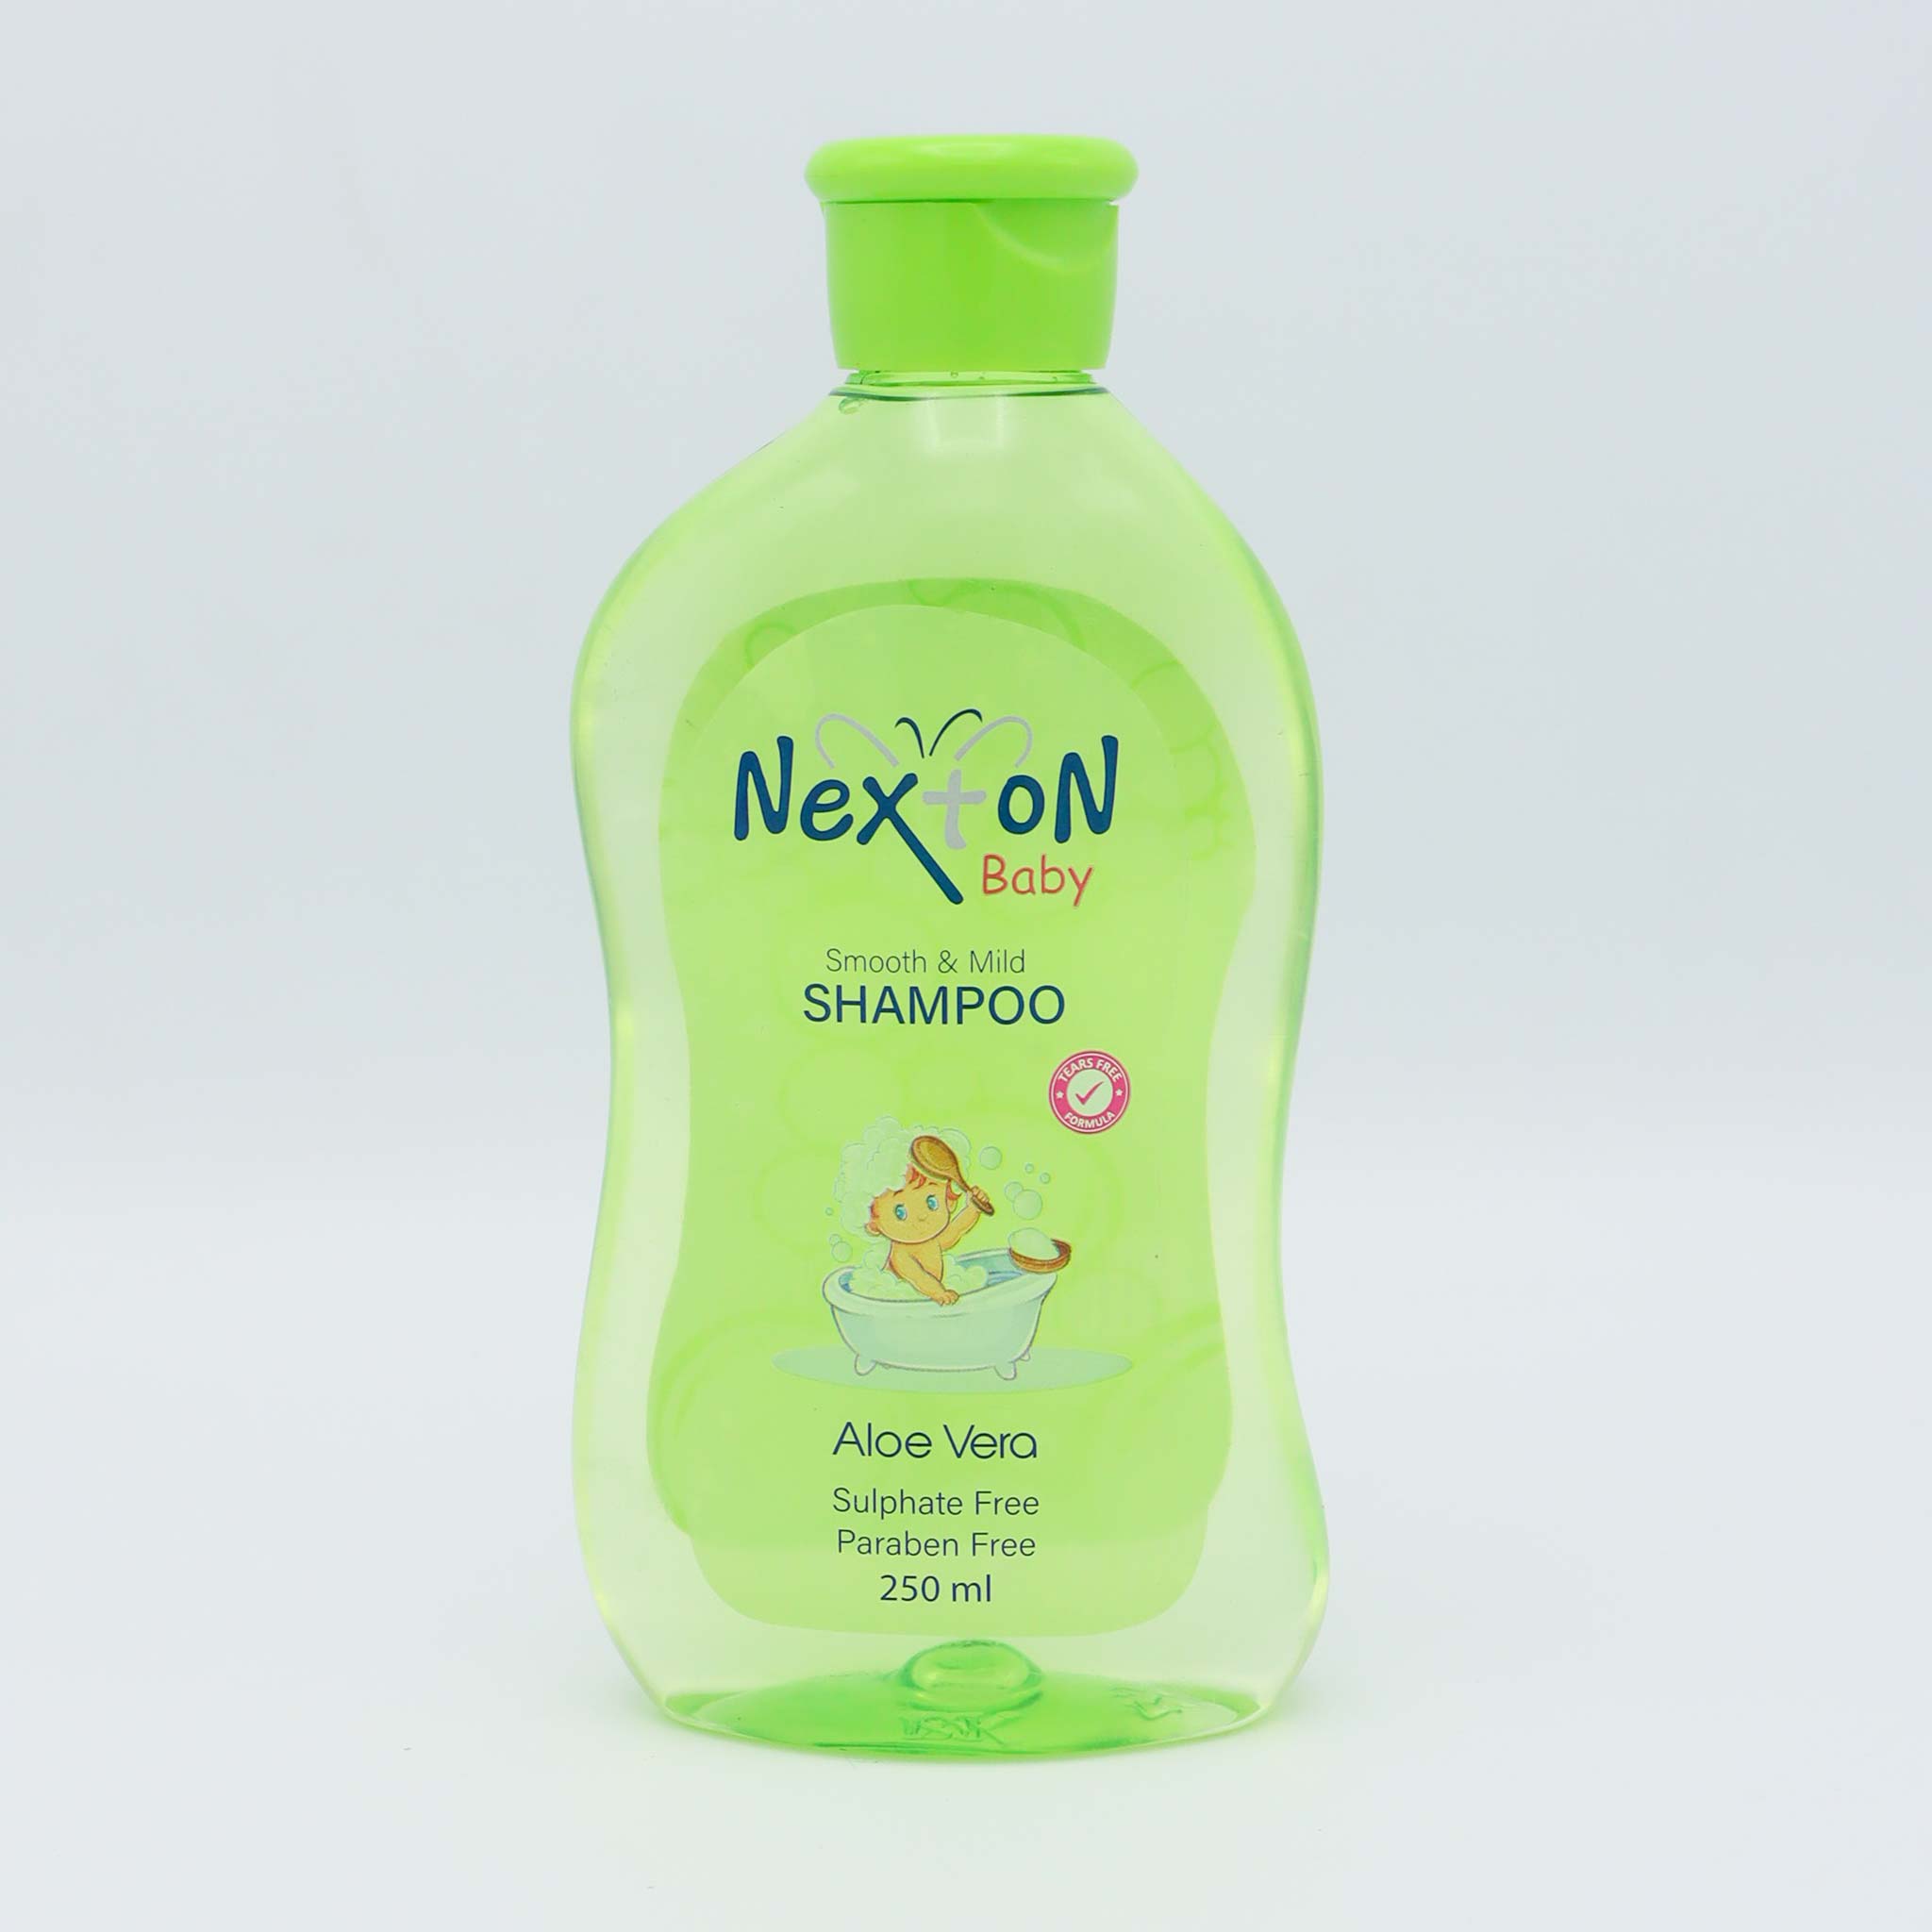 Smooth & Mild Shampoo by Nexton Baby